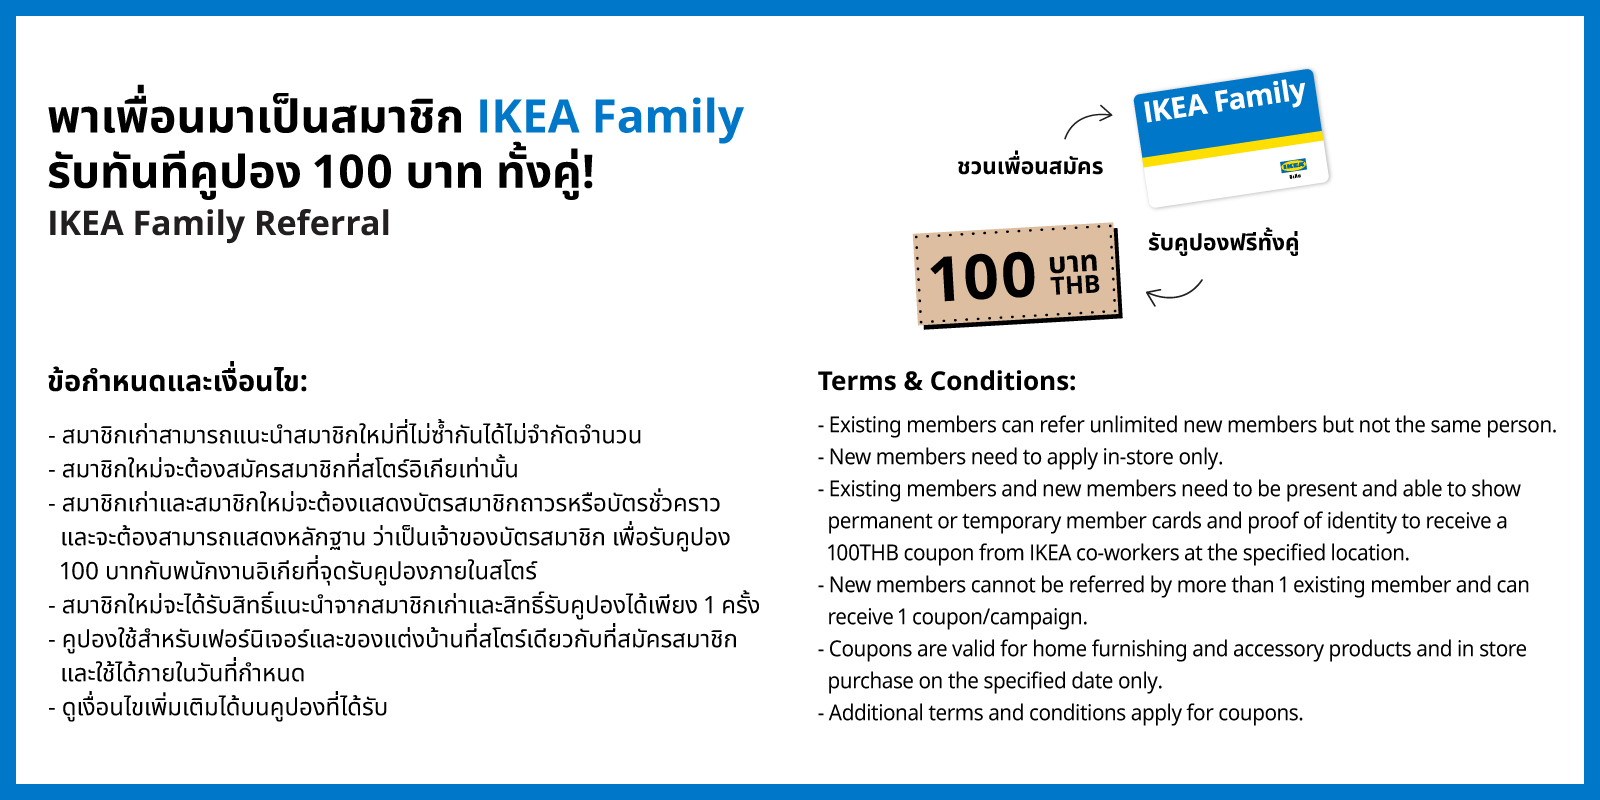 IKEA Family - Referral Activities TNC